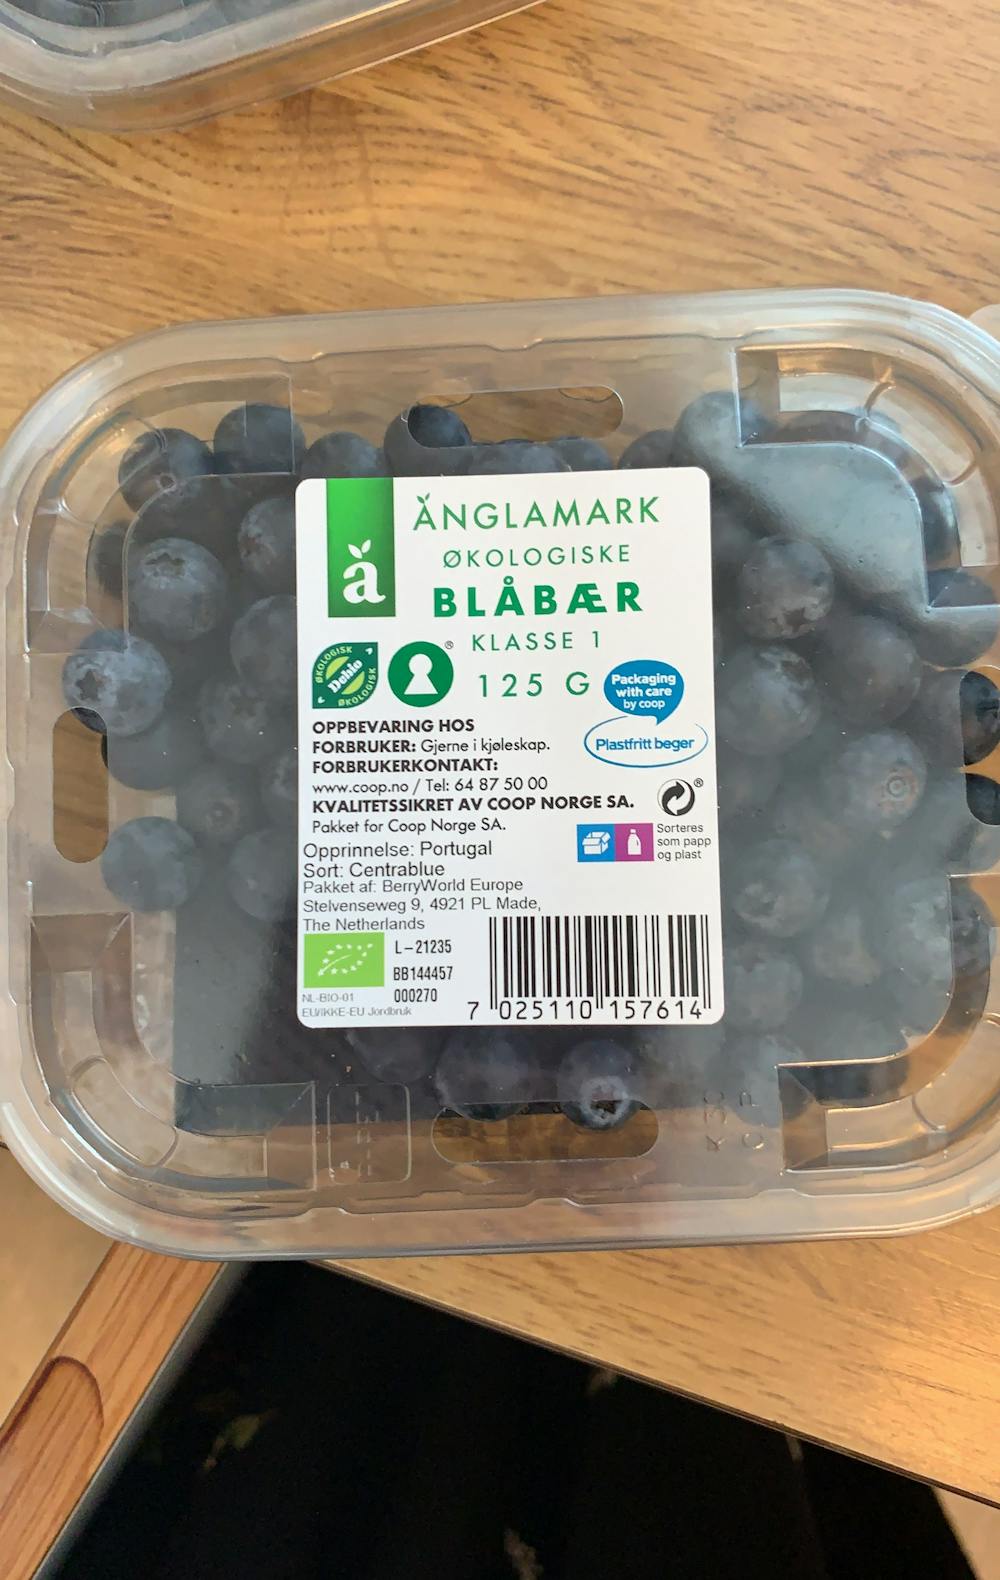 Ingredienslisten til Økologiske blåbær, Ânglamark